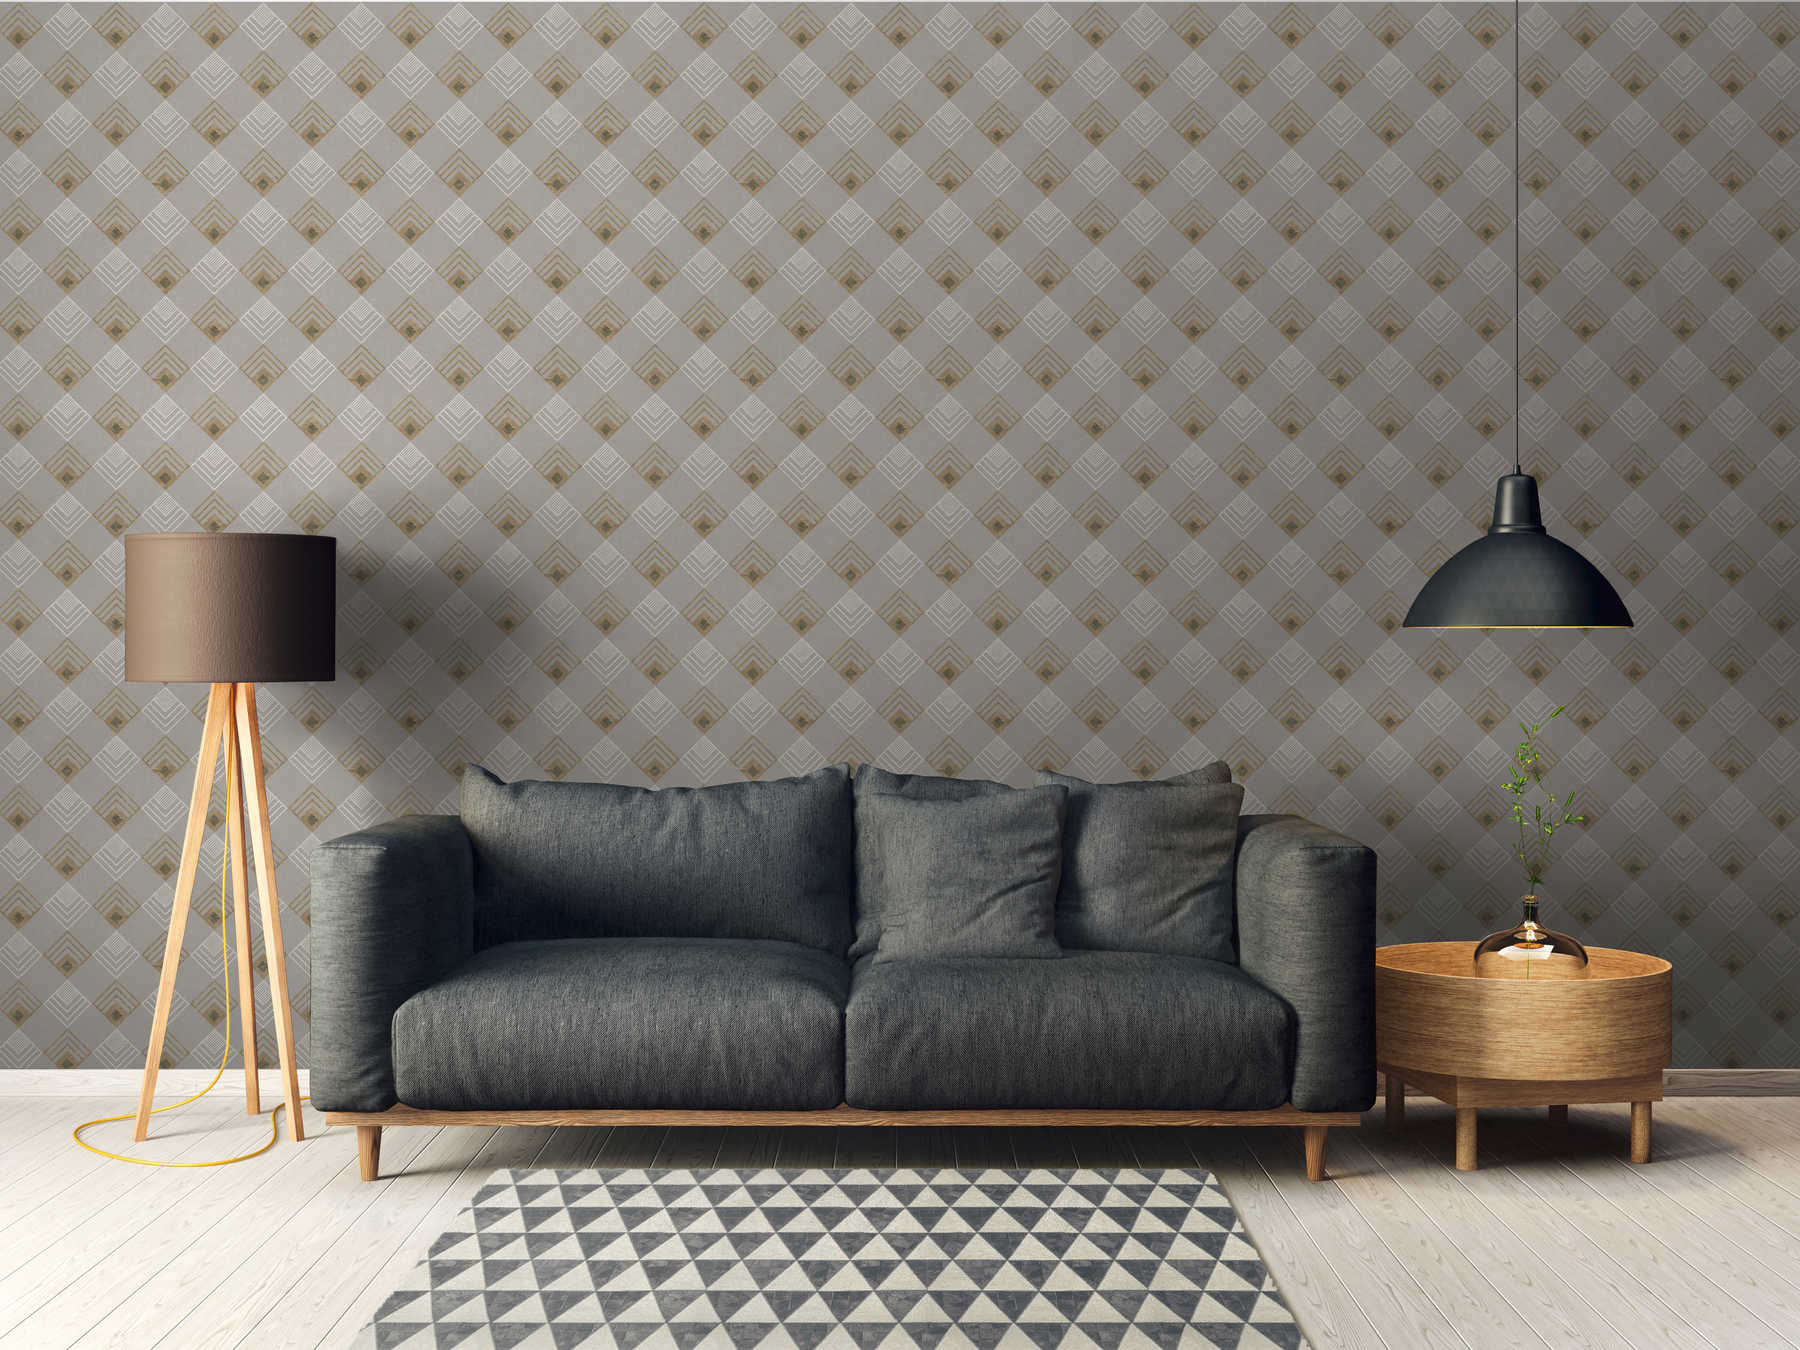             Non-woven wallpaper Art Deco pattern, metallic effect - grey, beige, white
        